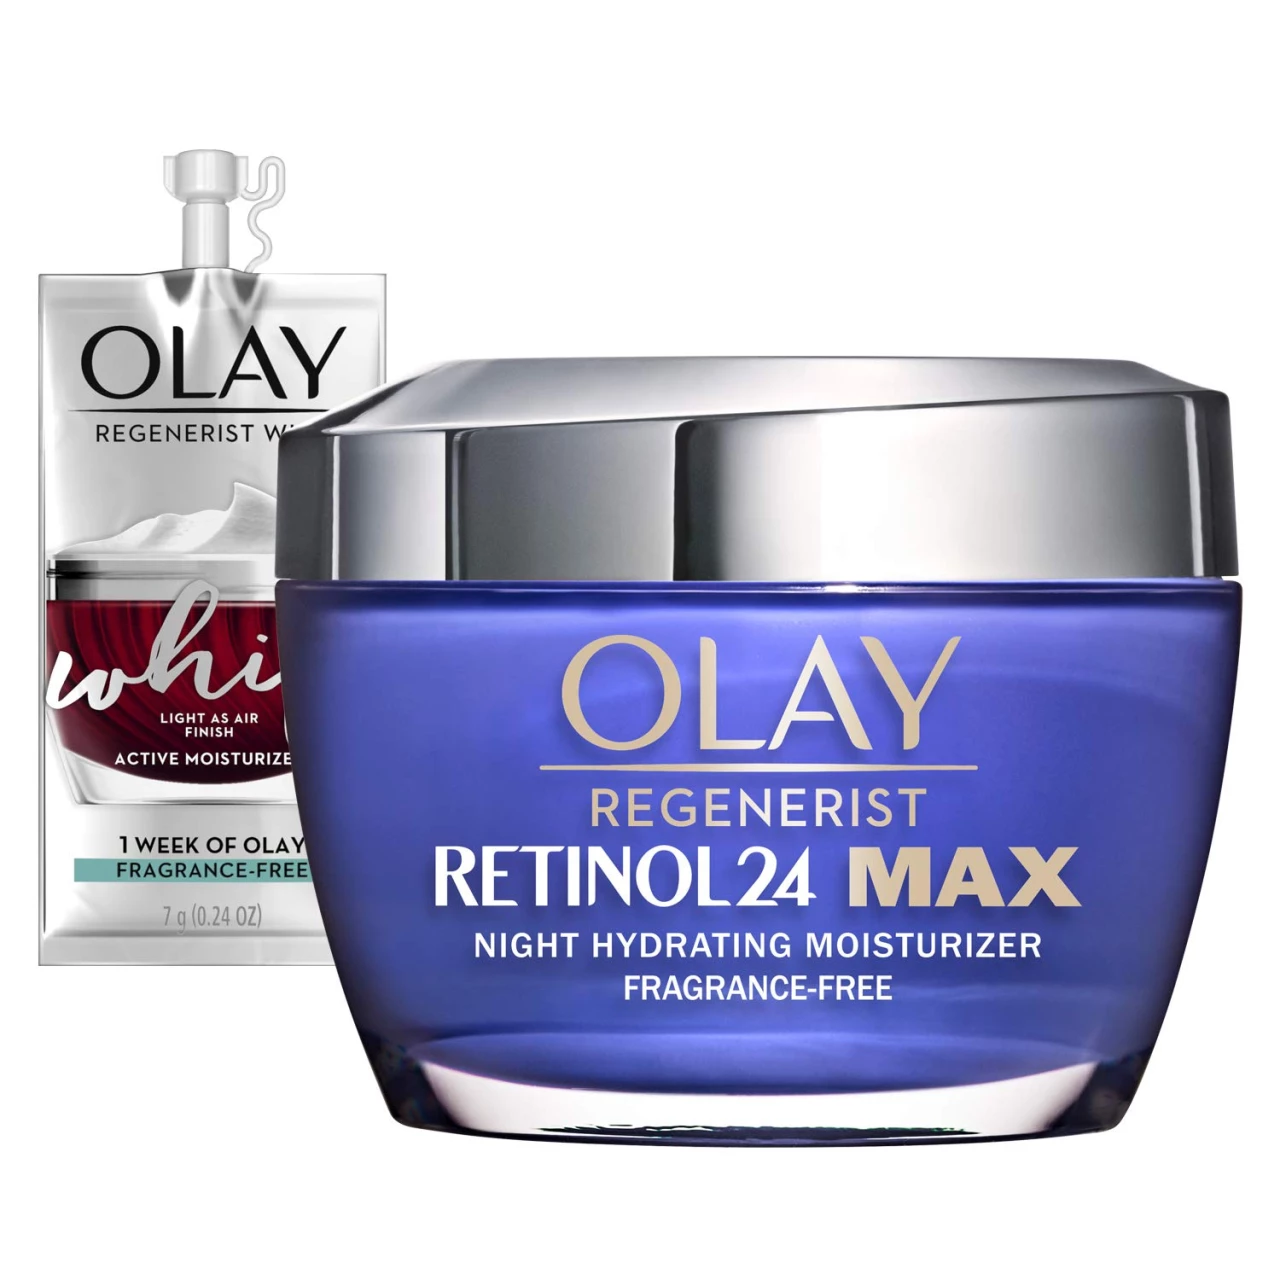 Olay Regenerist Retinol 24 Max Moisturizer, Retinol 24 Max Hydrating Night Face Cream, Fragrance-Free Non Greasy Feeling 1.7 oz